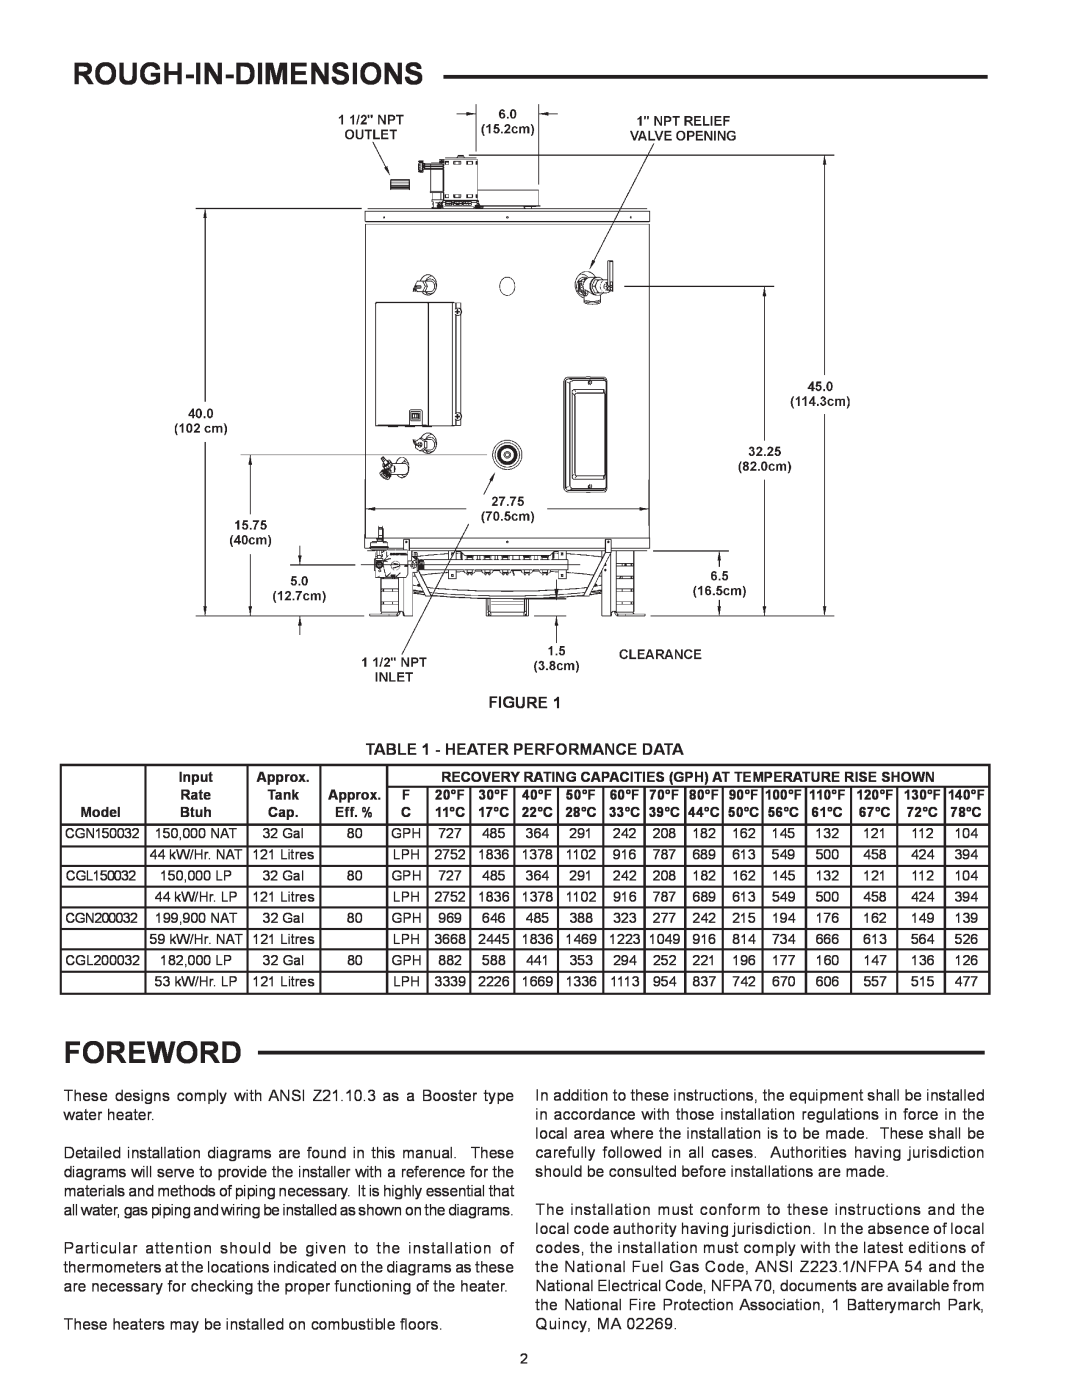 Lochinvar CG200, CG150 warranty Rough-In-Dimensions, Foreword, Heater Performance Data 